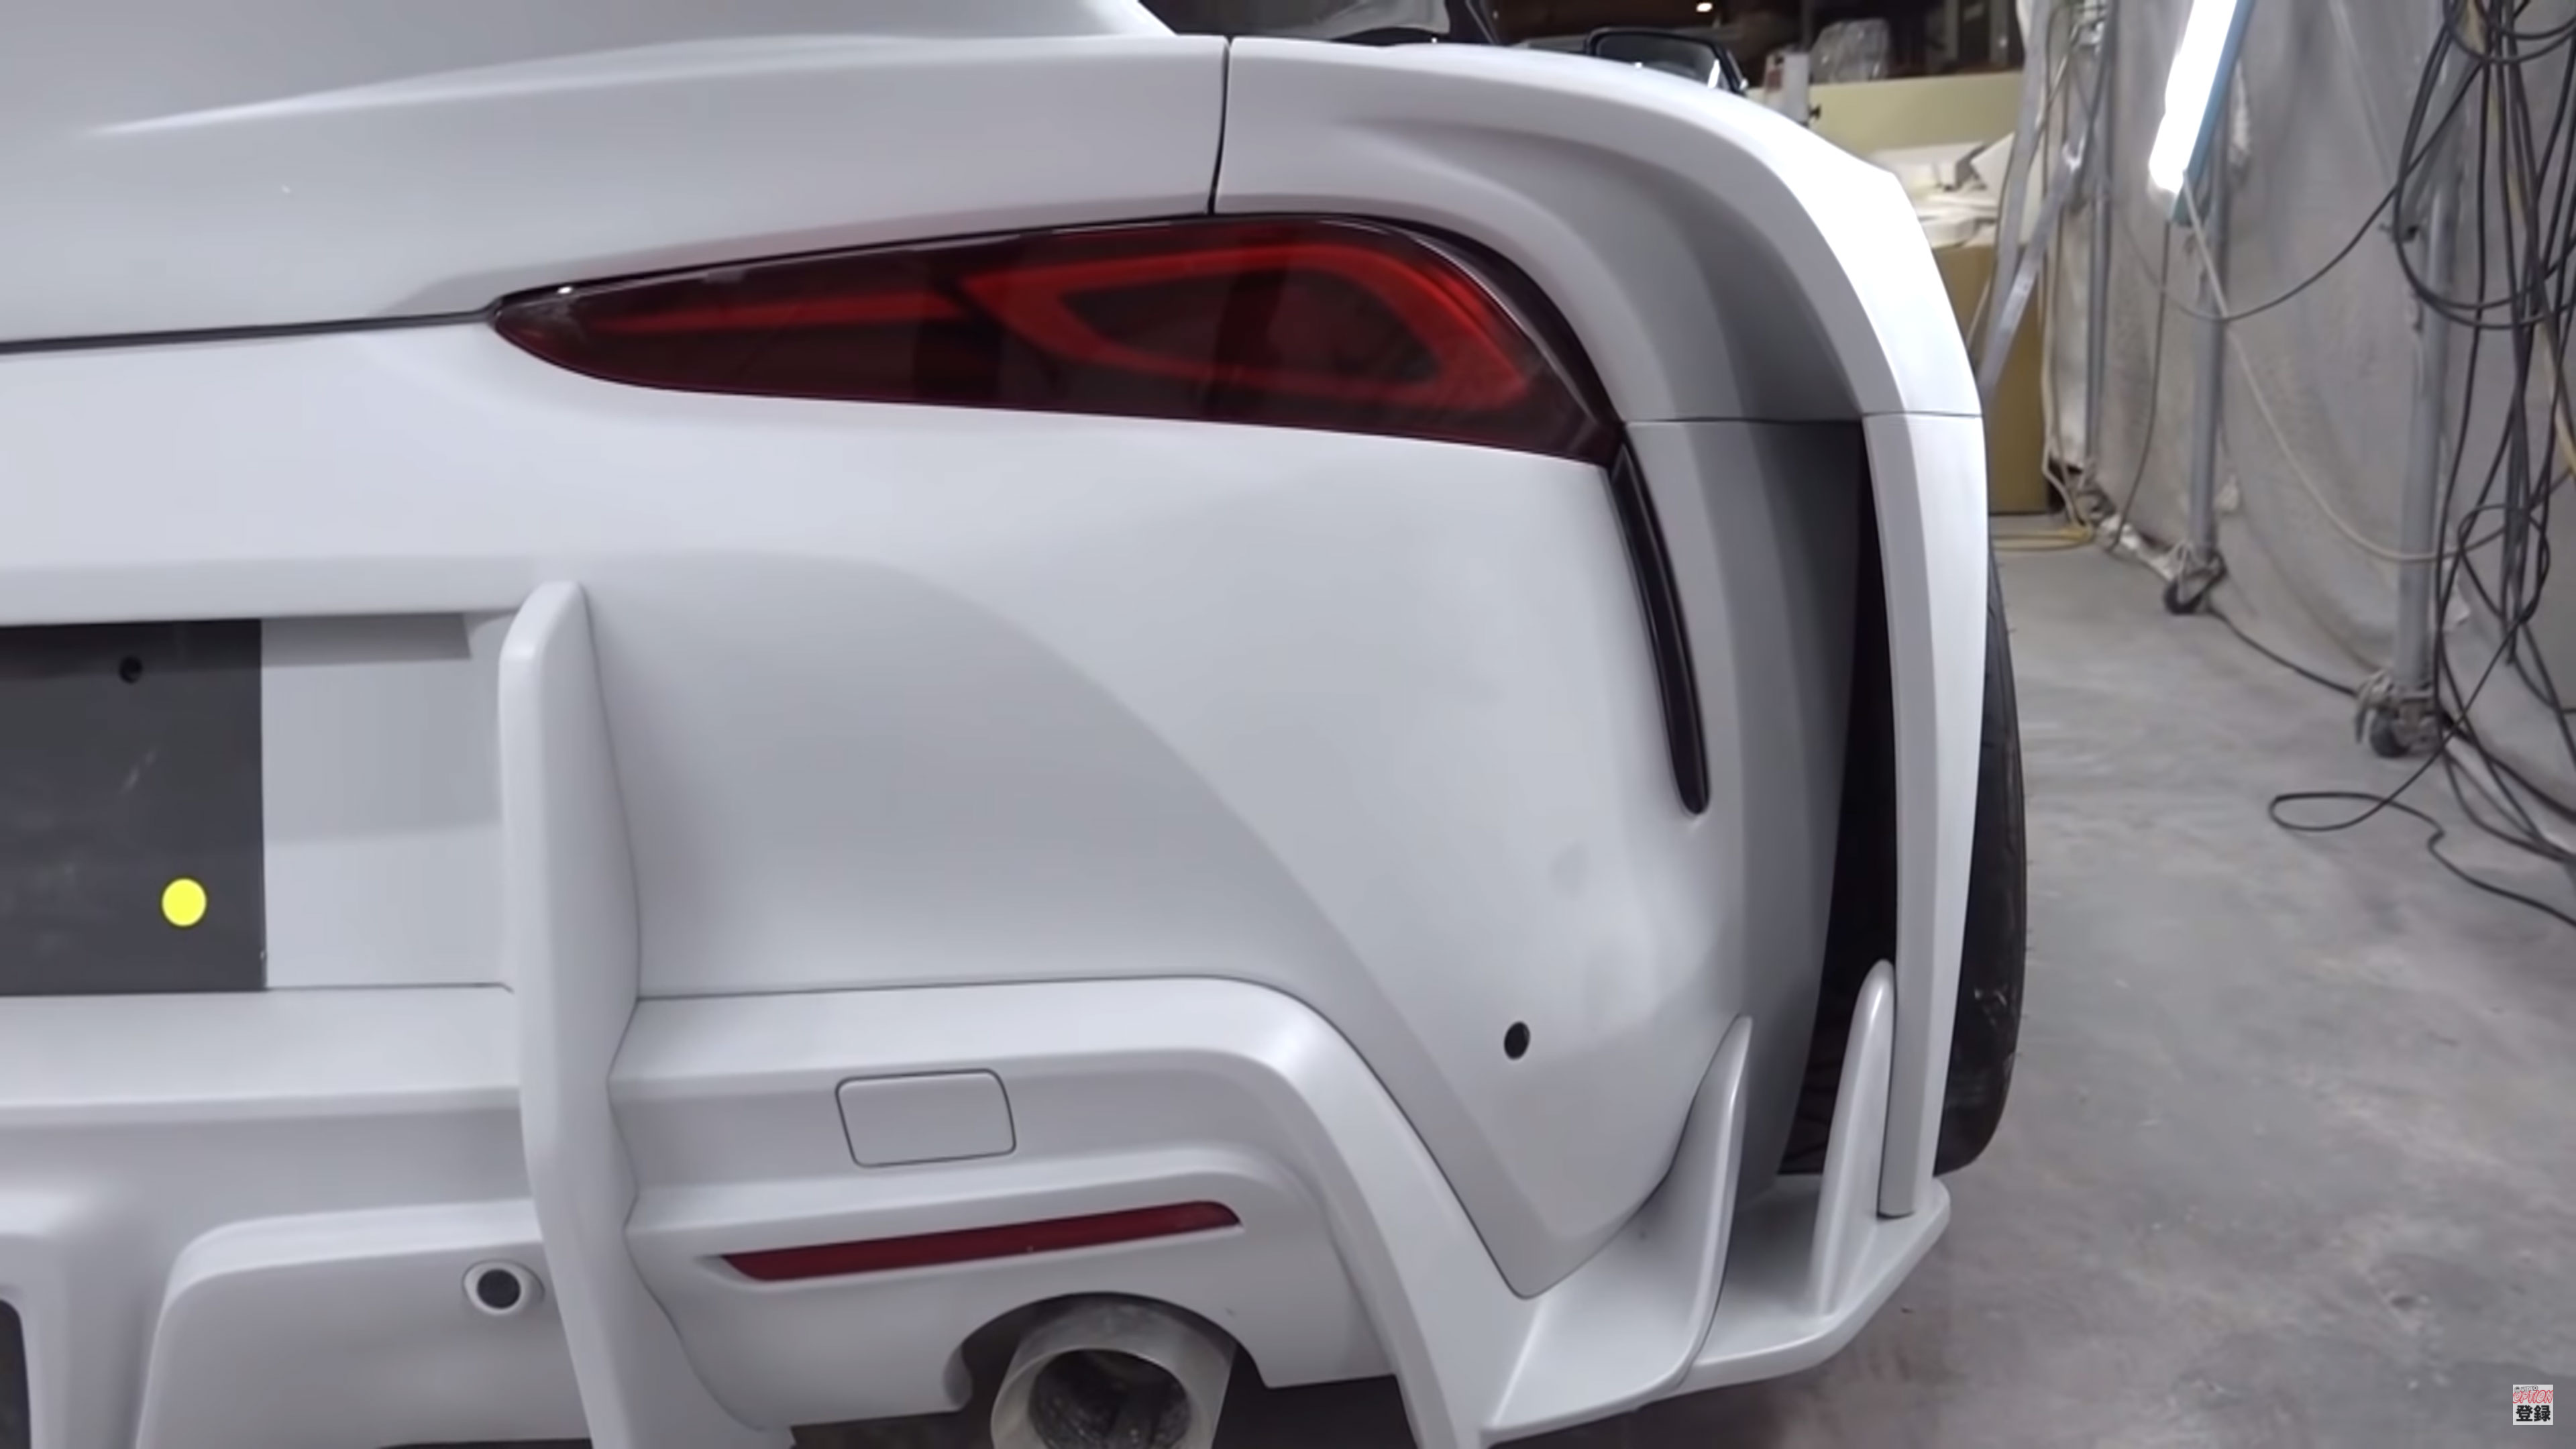 Veilside A90 Toyota Supra for the 2022 Tokyo Motor Salon